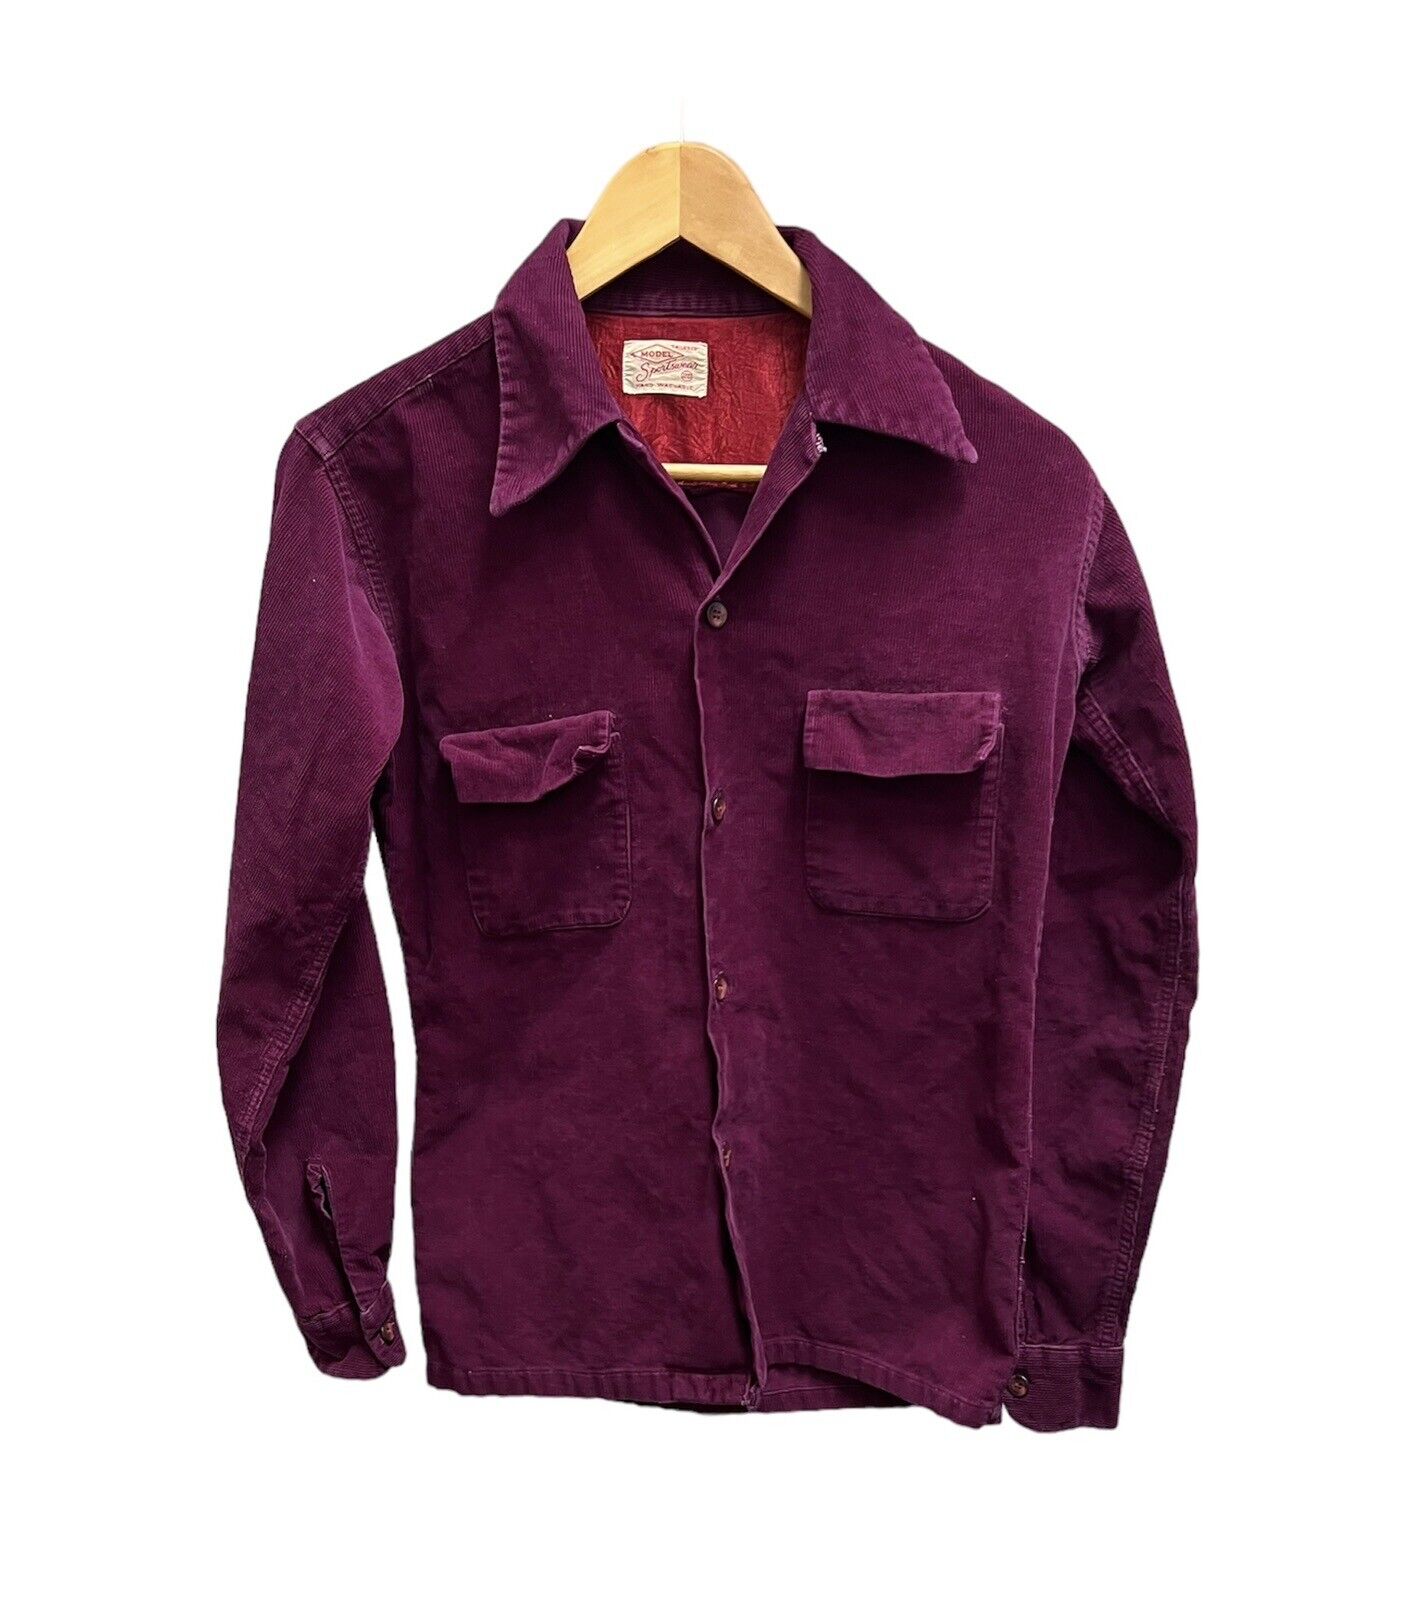 Vintage 1950s Corduroy Loop Collar Men’s Burgundy Shirt 50s S/M